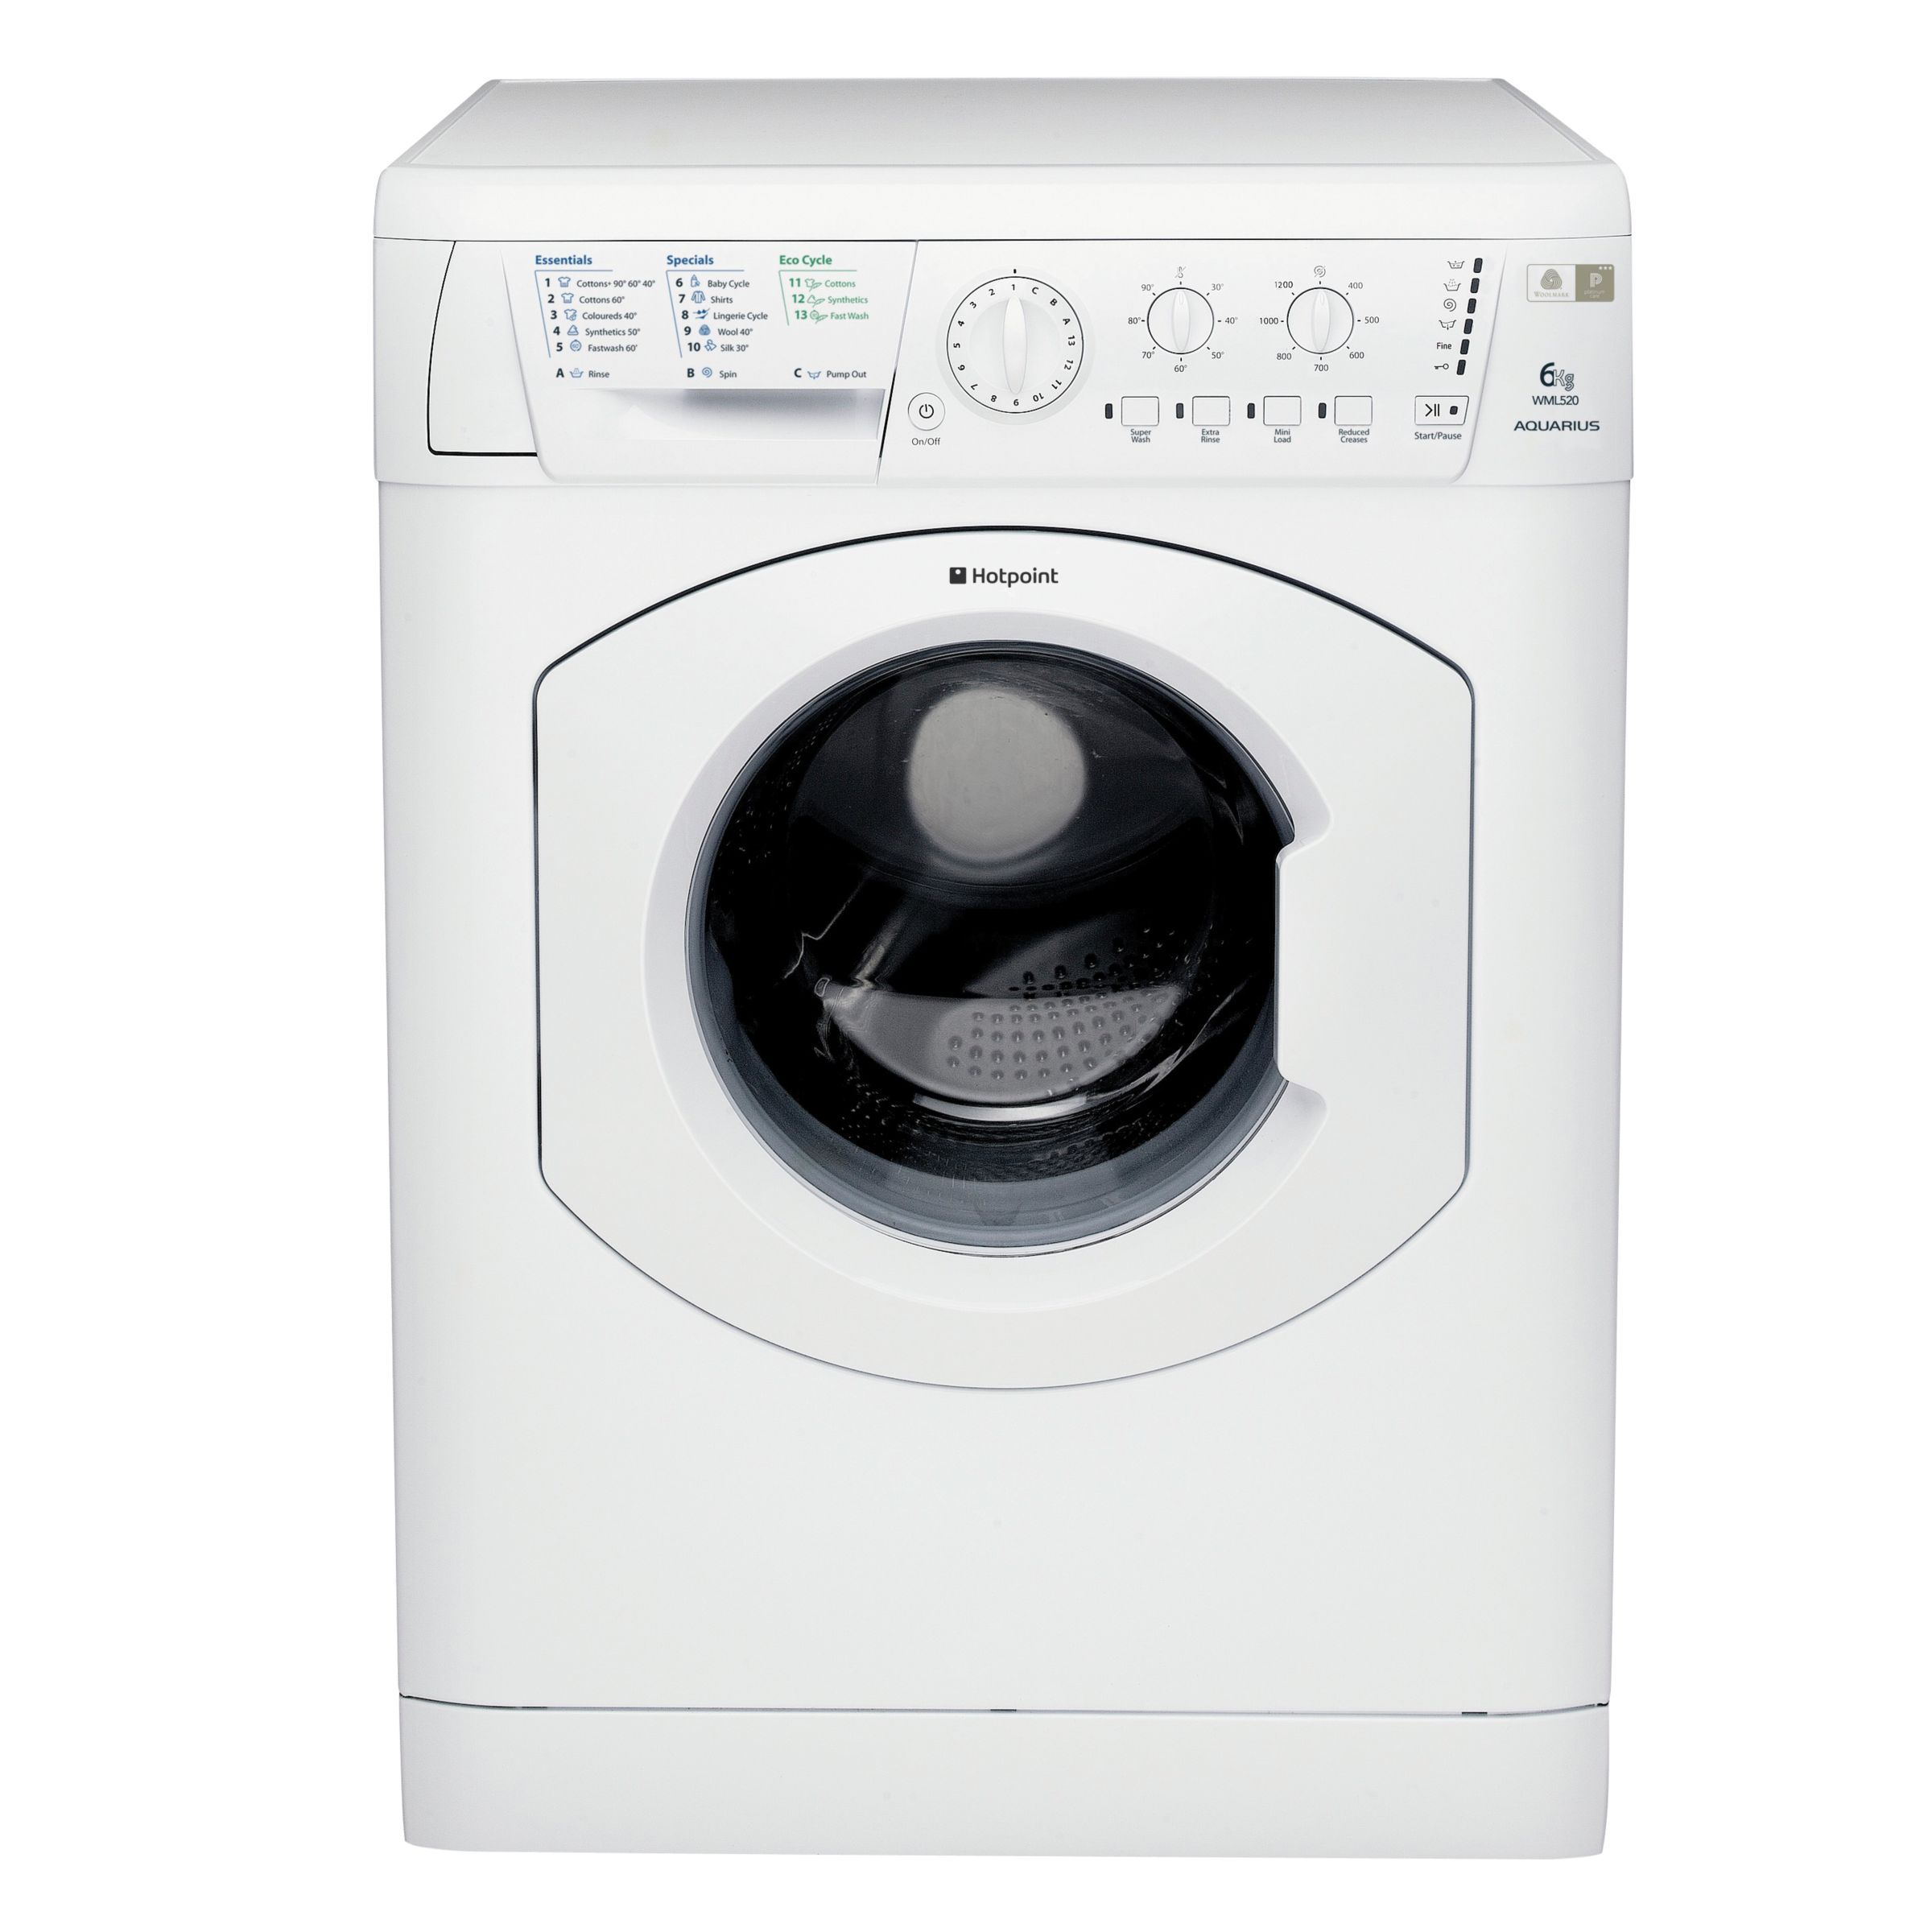 Hotpoint WML520P Washing Machine, White at John Lewis